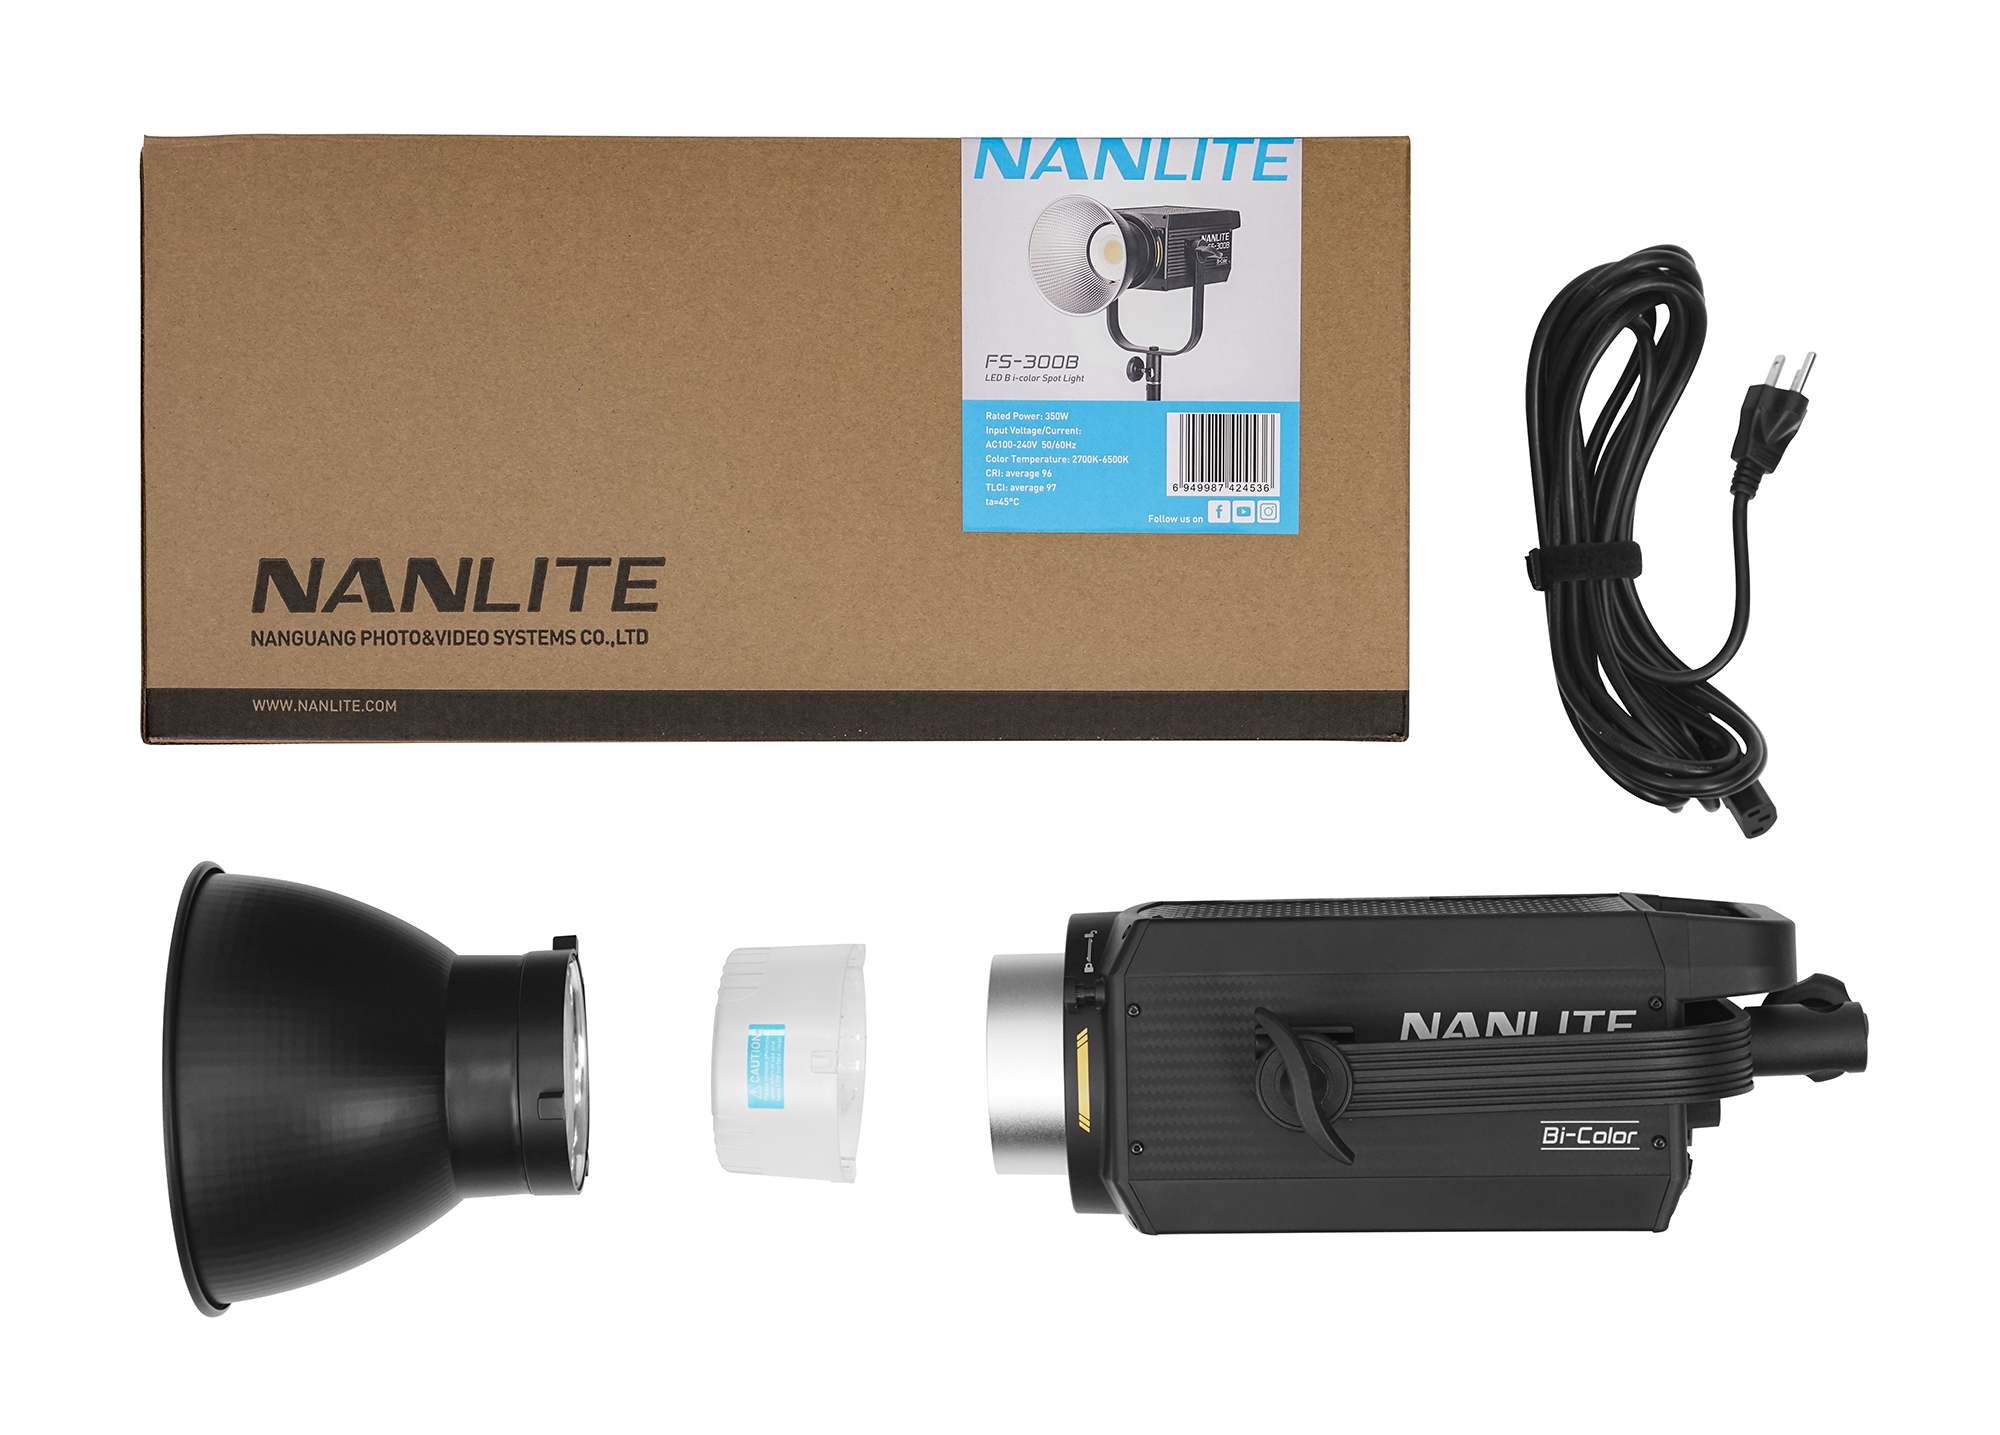 NANLITEが2色発光のCOB LEDスポットライト「 FS-300B」を発表 | CineD